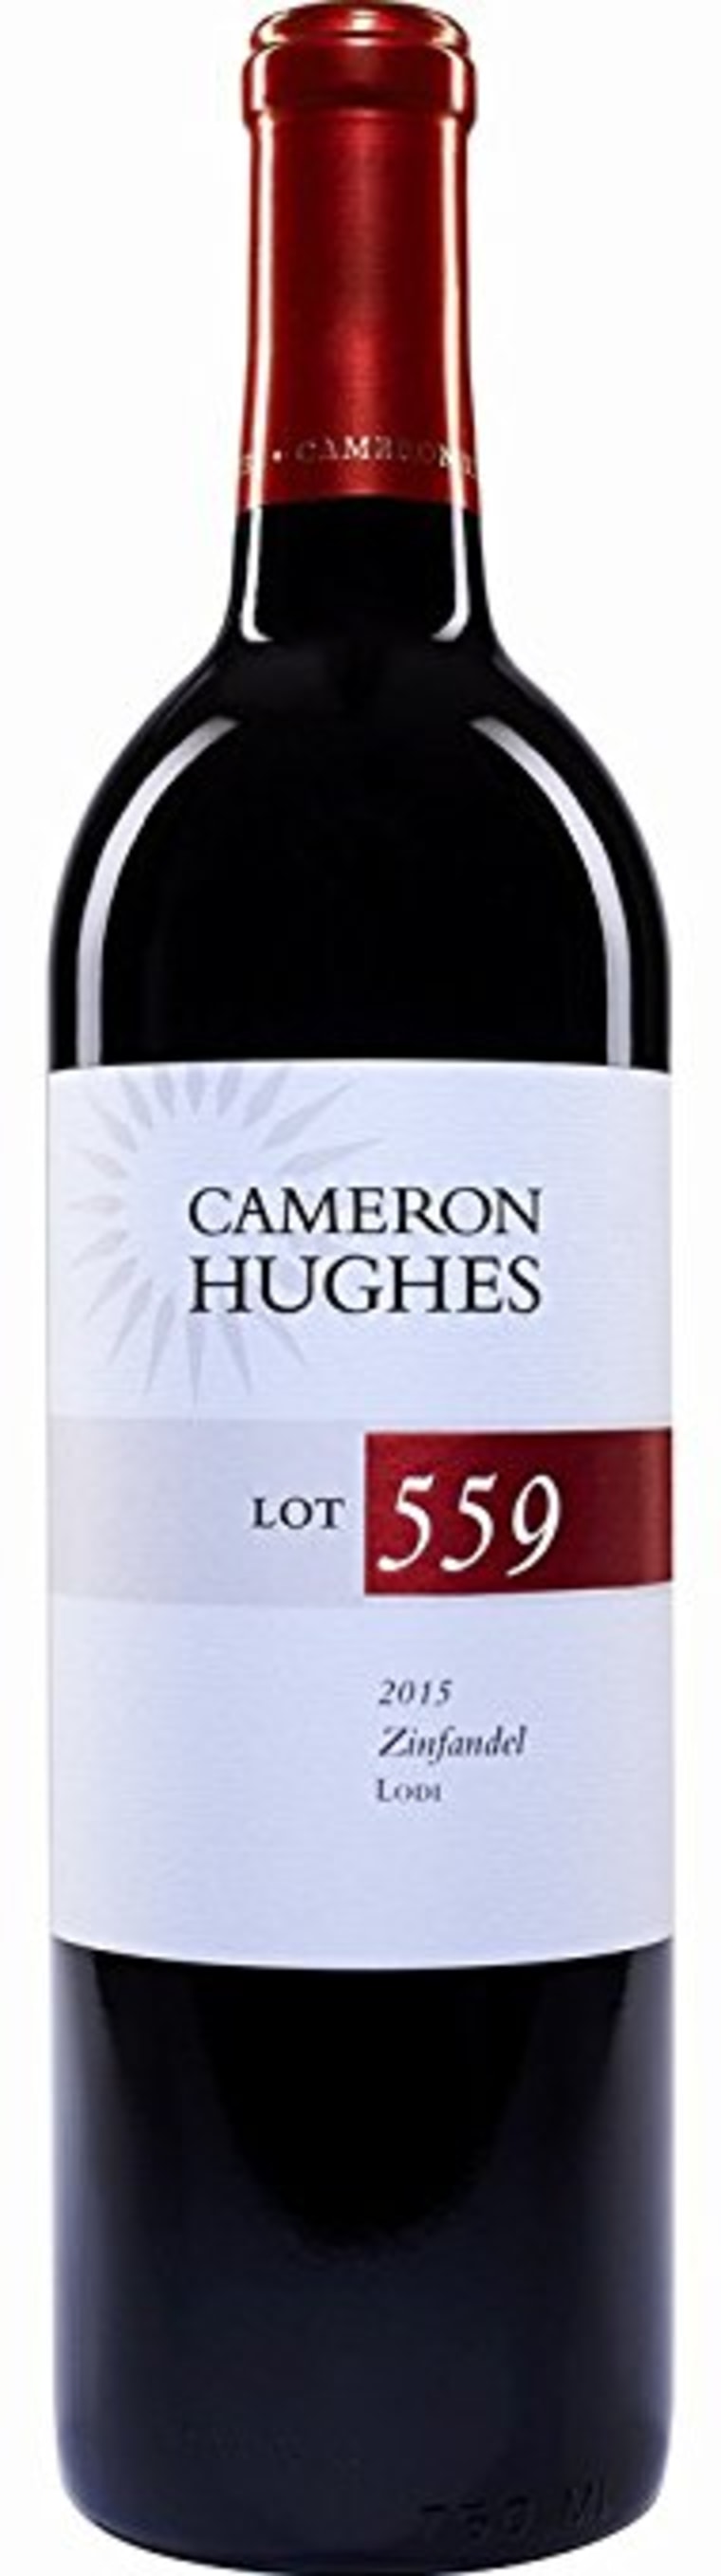 Cameron Hughes Lot 559 2015